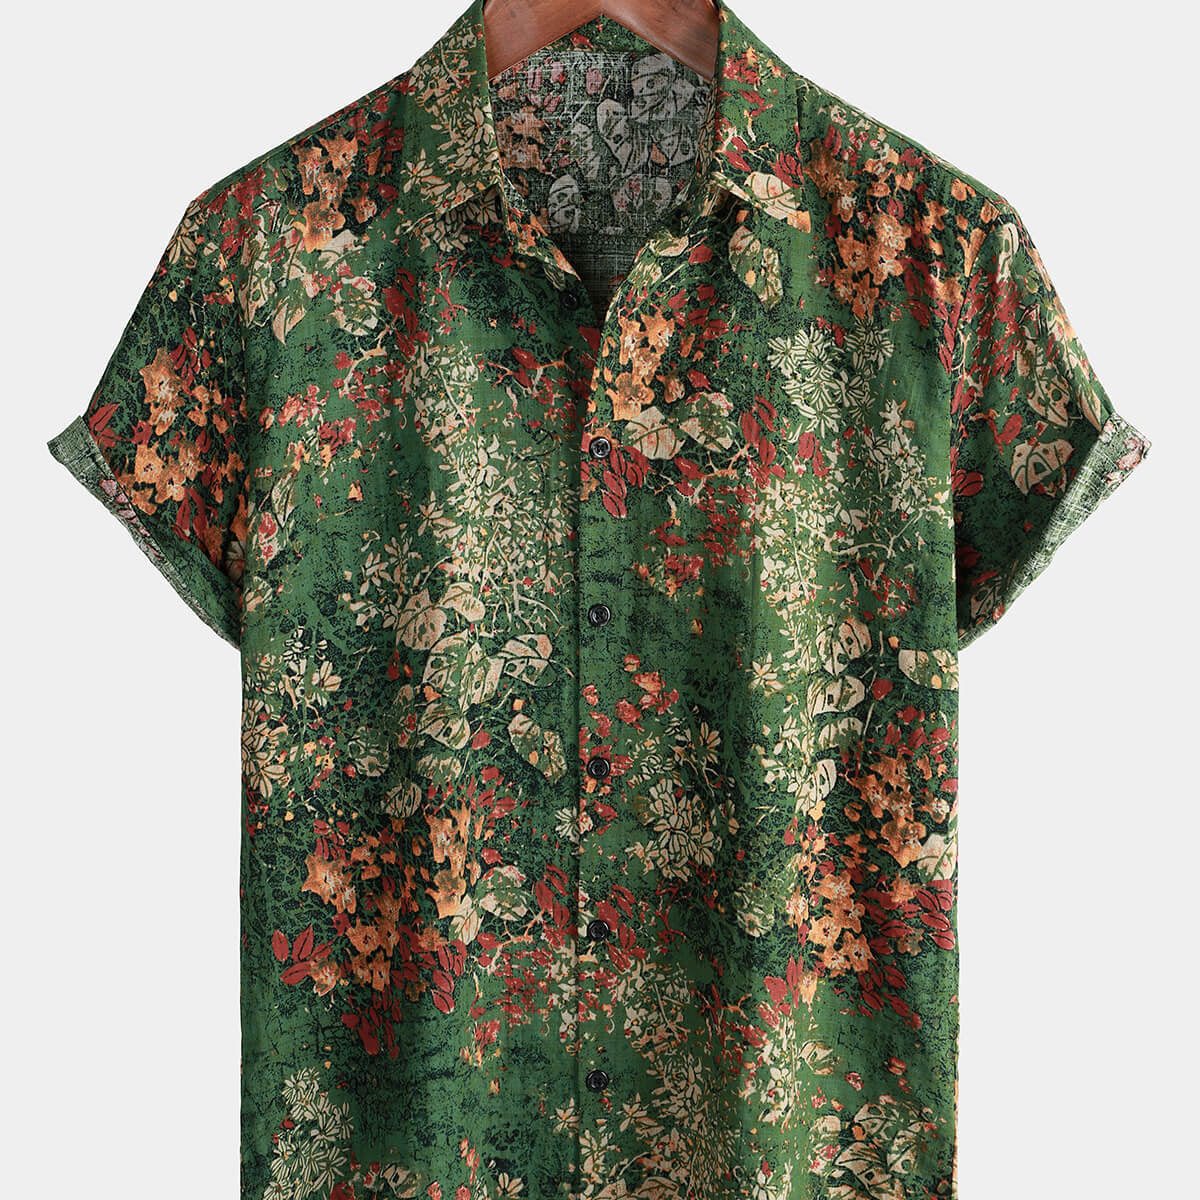 Men's Vintage Holiday Retro Cotton Green Button Up Short Sleeve Shirt